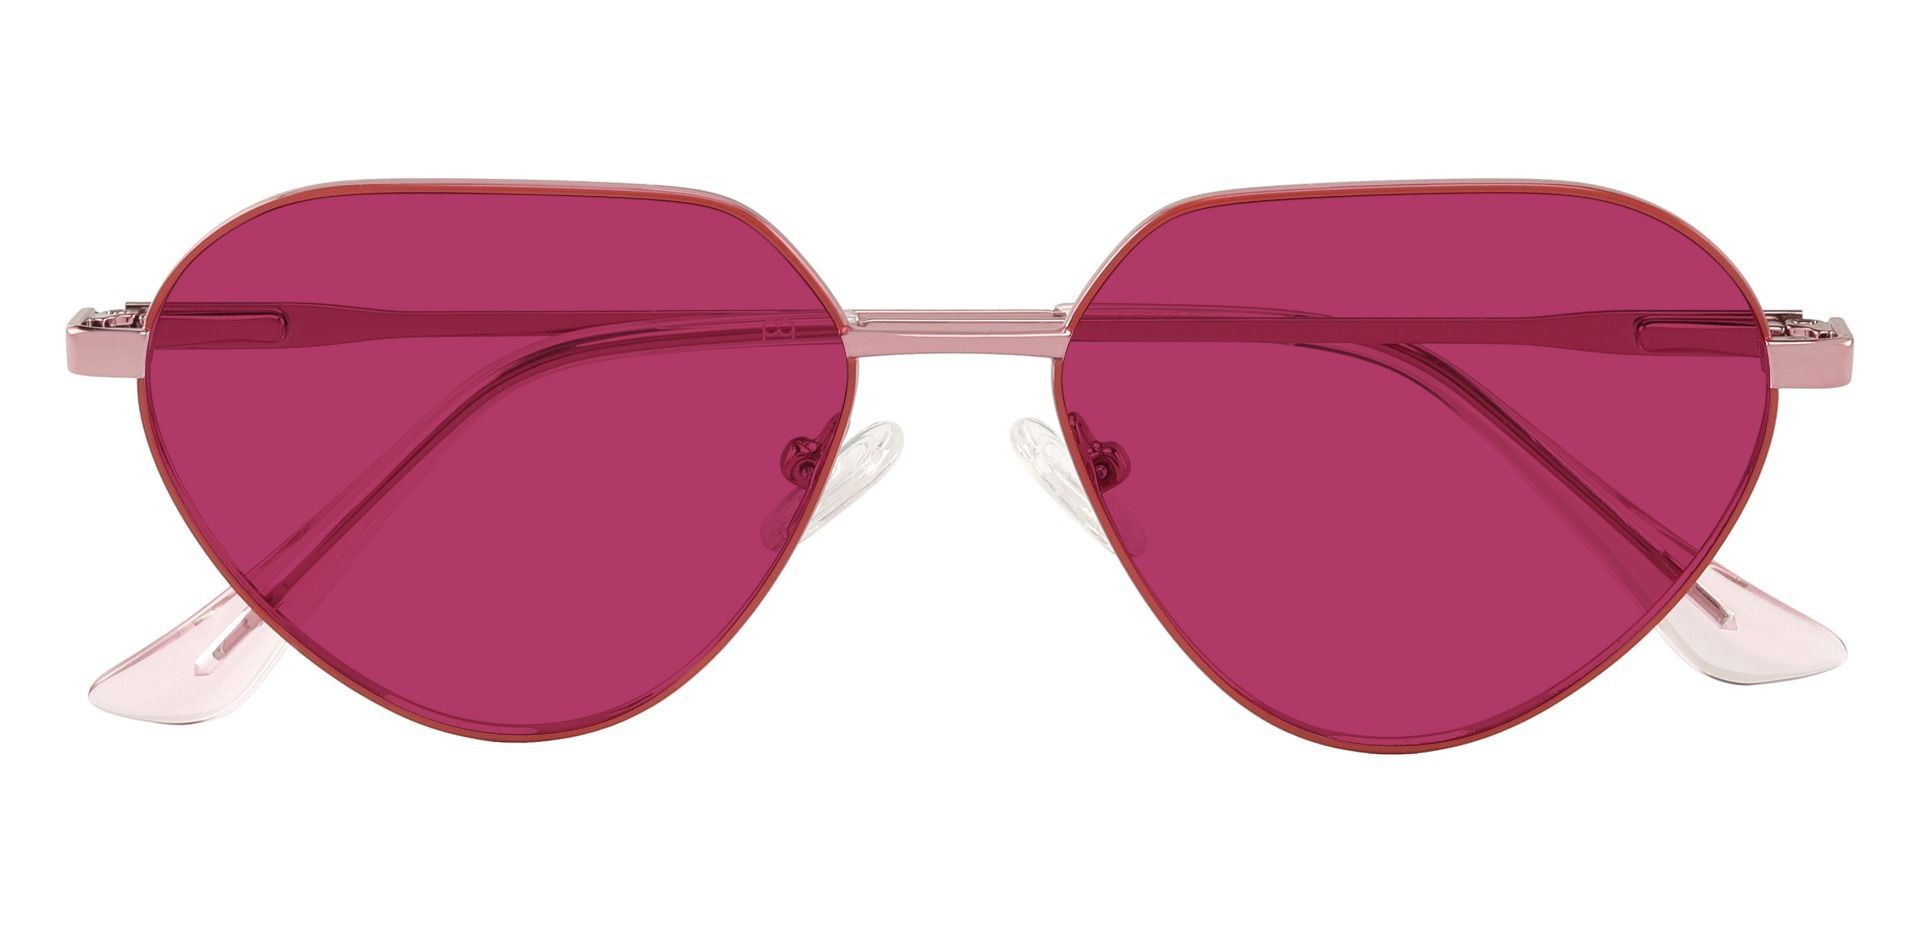 Vitenzi Bifocal Sunglasses Wraparound Readers For Reading Under The Lecce  Sun : Target